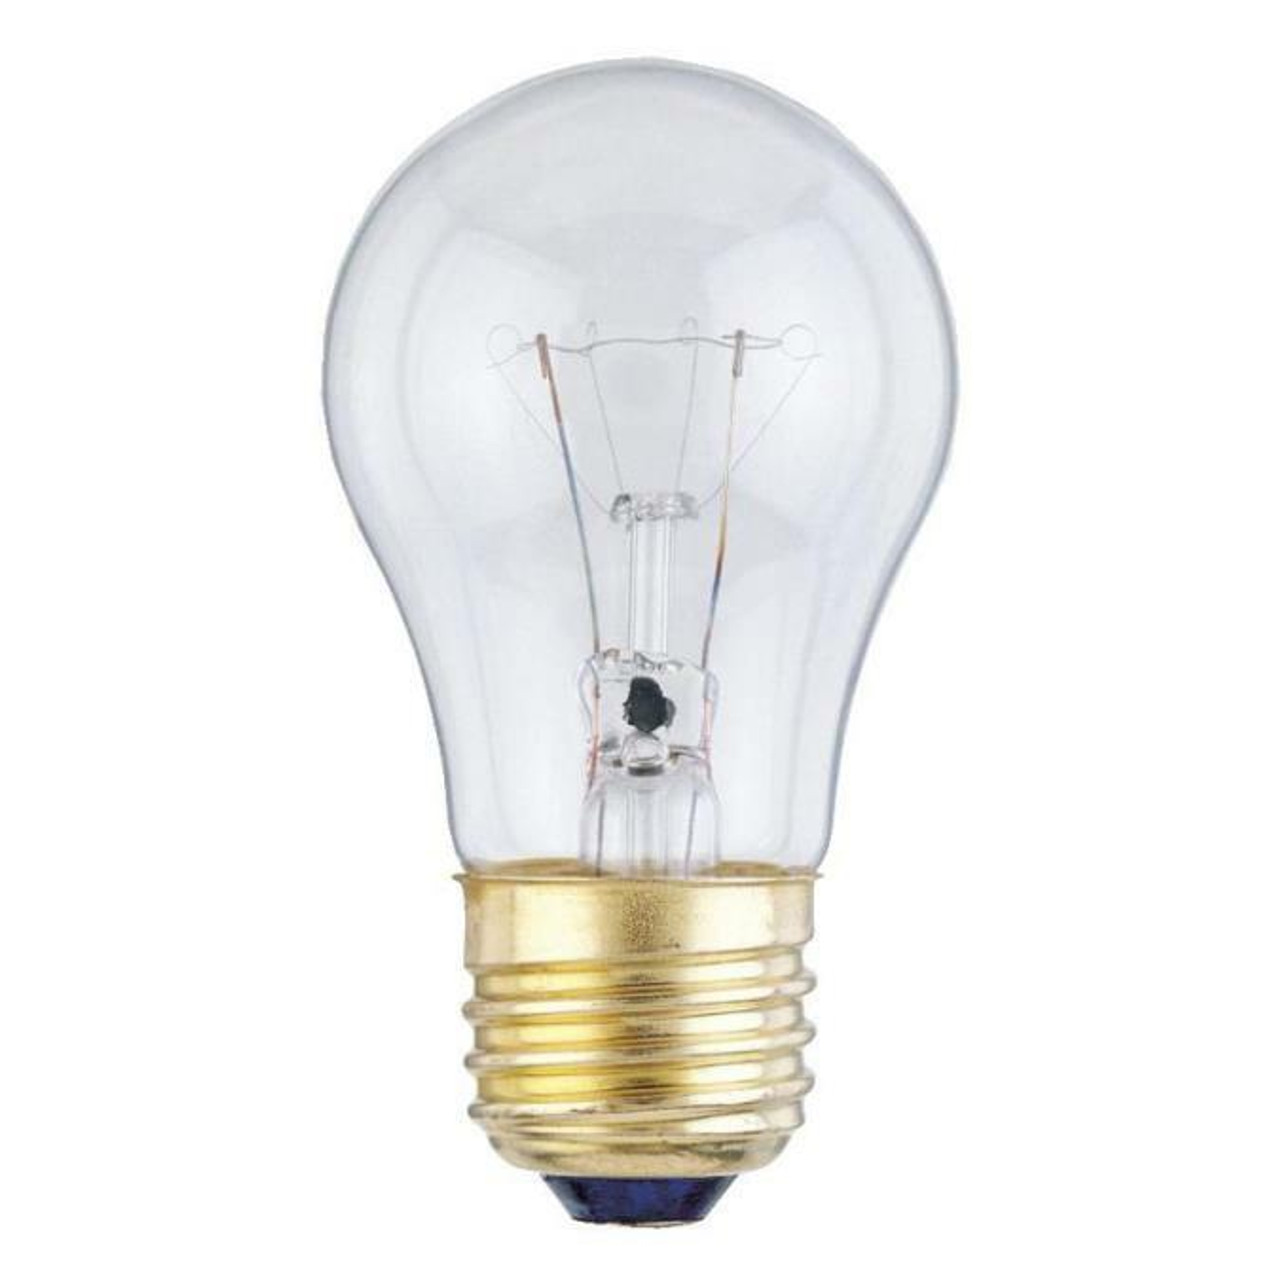 Sylvania Light Bulb, Appliance, 40 W